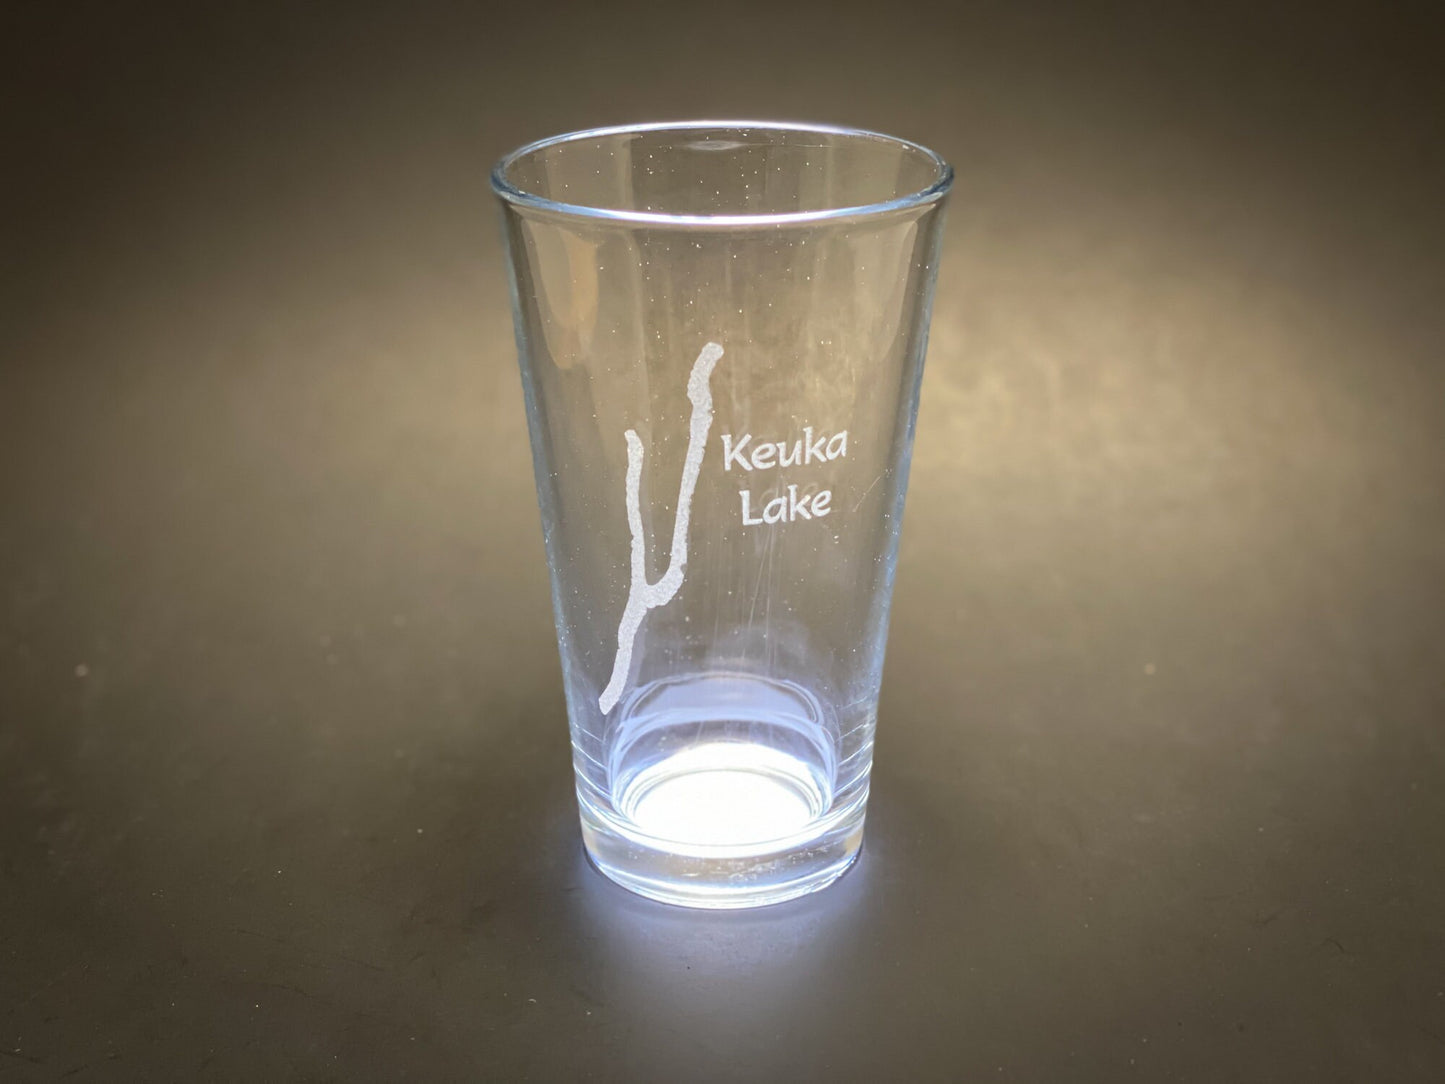 Keuka Lake New York Pint Glass - Lake Life - Laser engraved pint glass